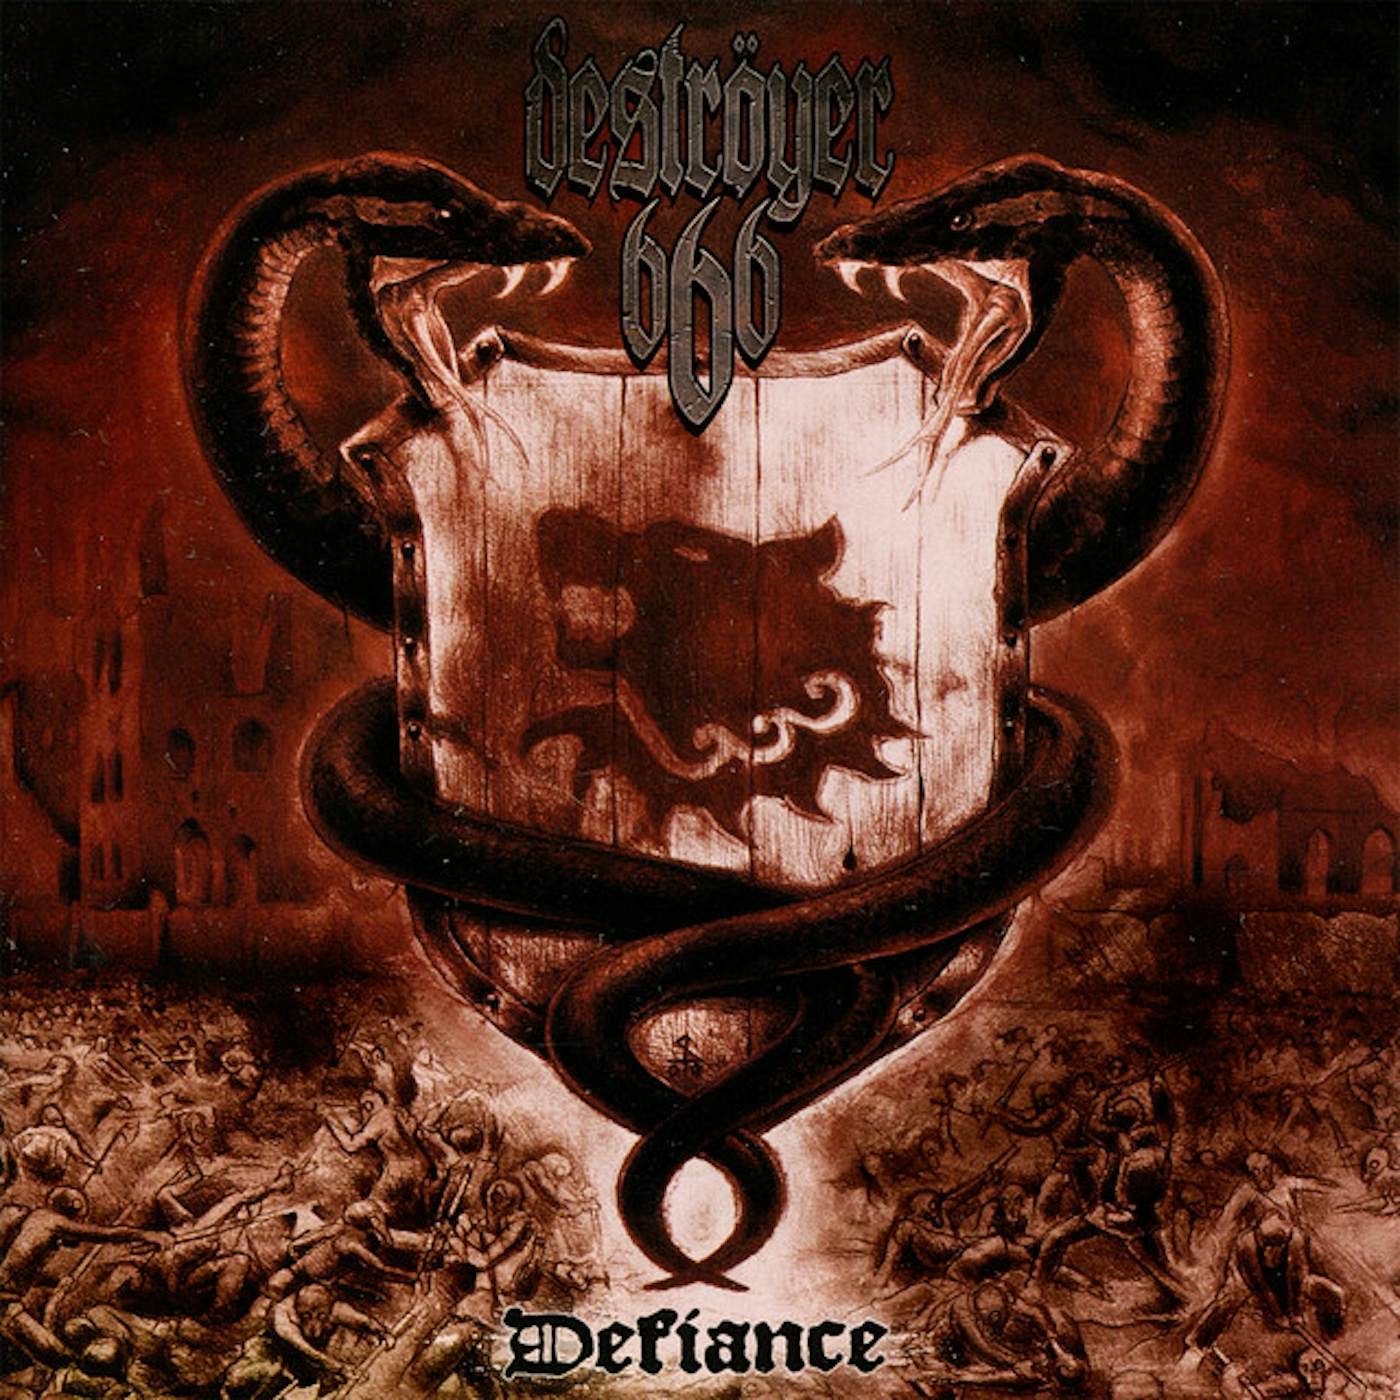 Deströyer 666 Defiance Vinyl Record